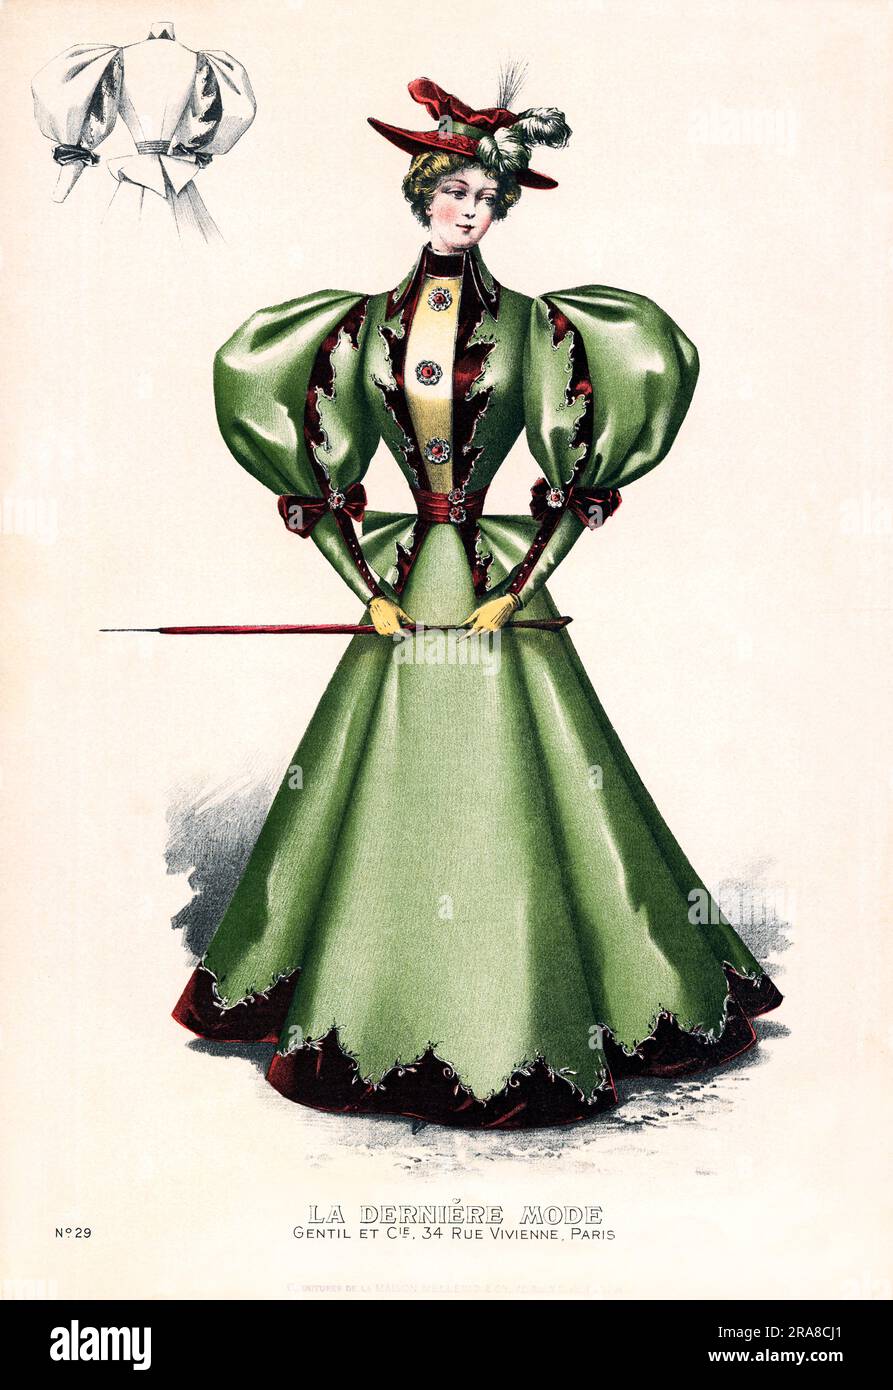 Paris, France:  1876 A lithographic print of a fashionable woman advertising 'La Derniere  Mode' (the latest fashion) at Gentil et Cie at 34 Rue Vivienne. Stock Photo